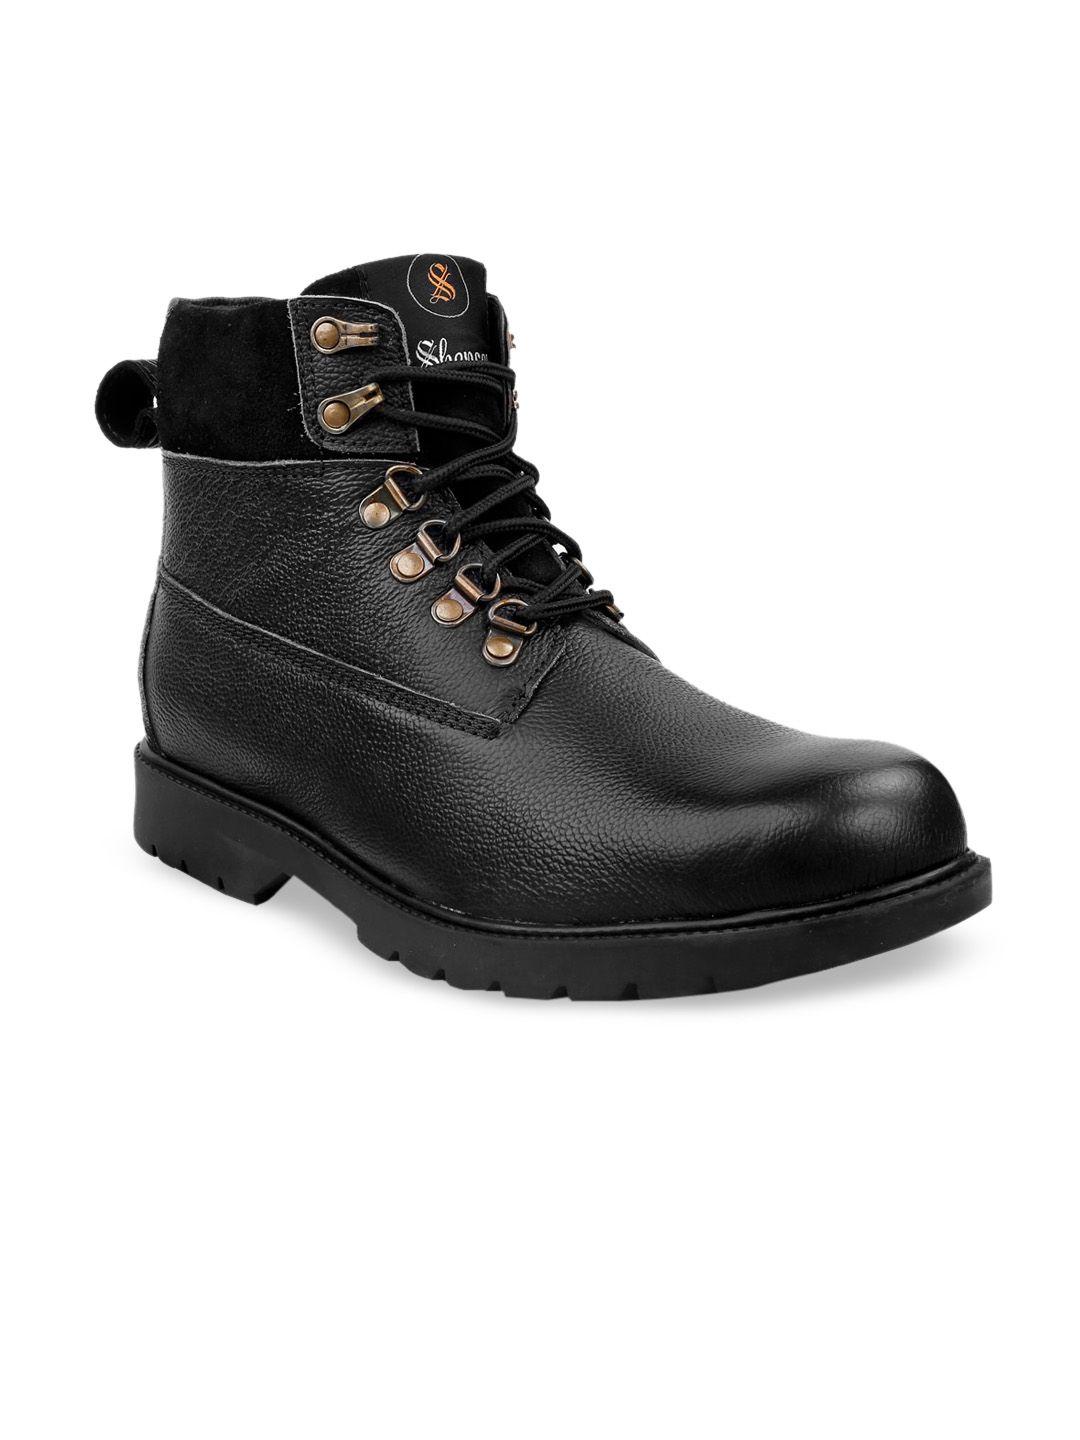 shences men black mid top leather flat boots